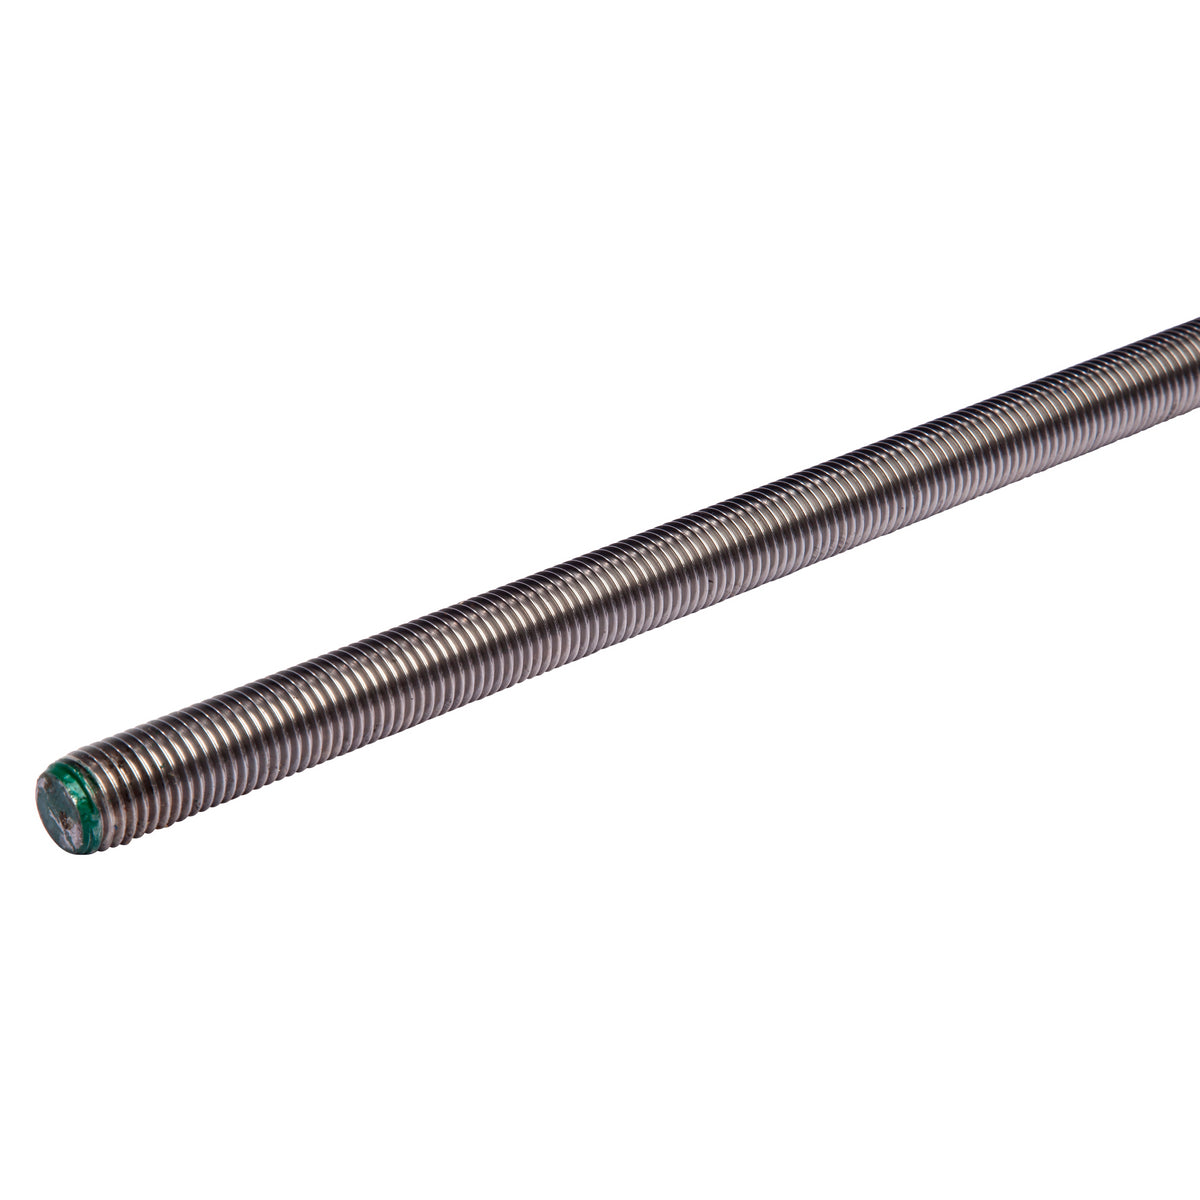 Stainless Steel Threaded Bar - M8 x 1m